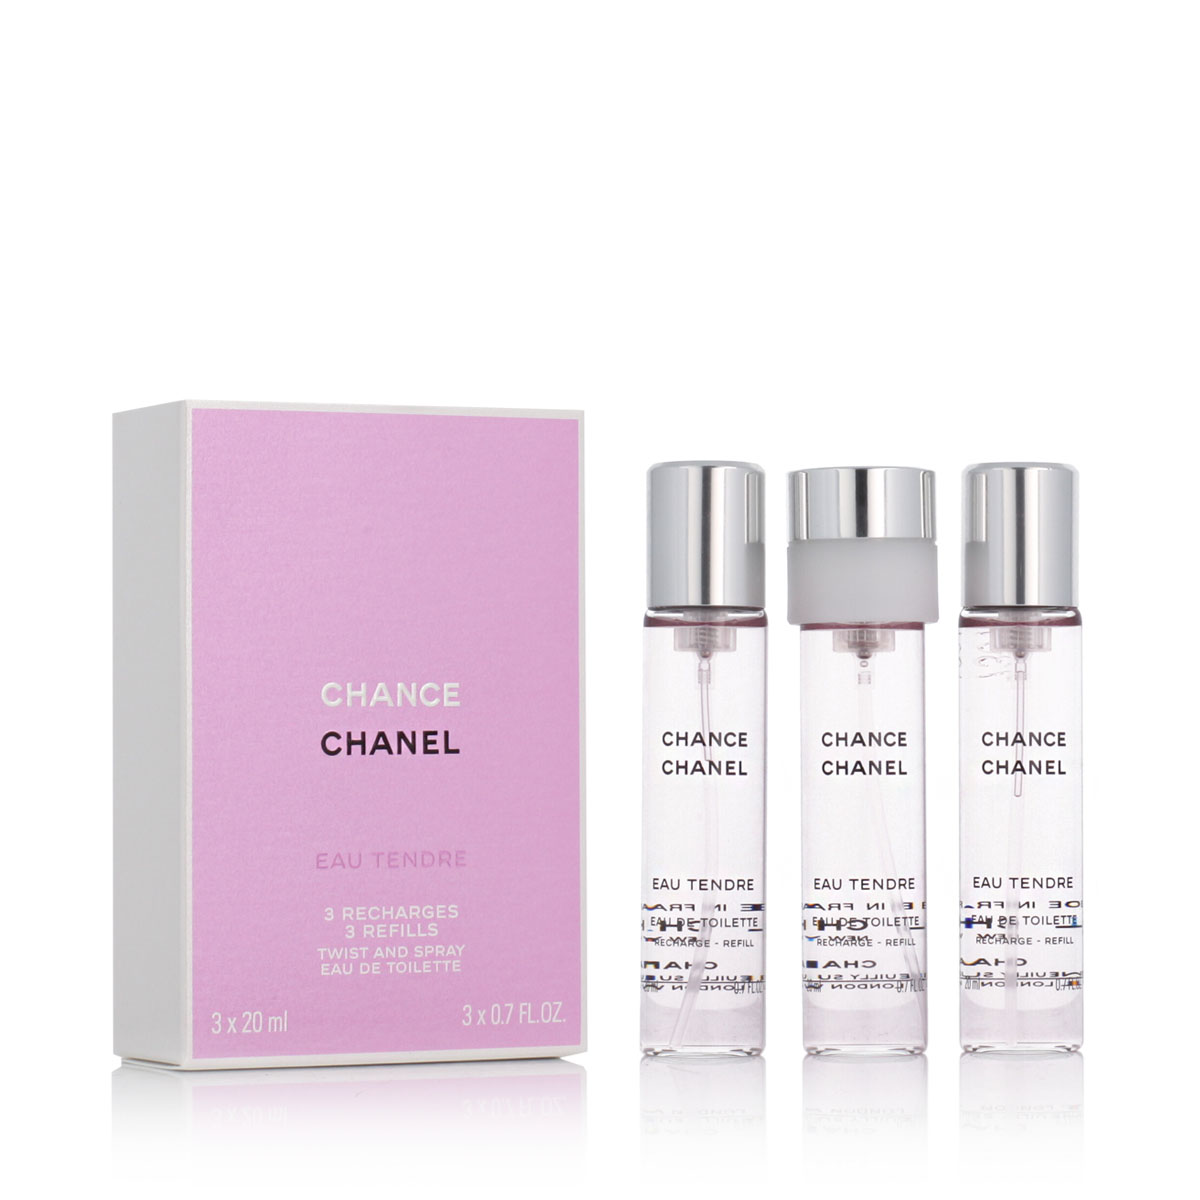 Chanel Chance Eau Tendre 60ml Chanel Chance Eau Tendre EDT 3 x 20 ml pocket spray refill W Kvepalai Moterims Rinkinys